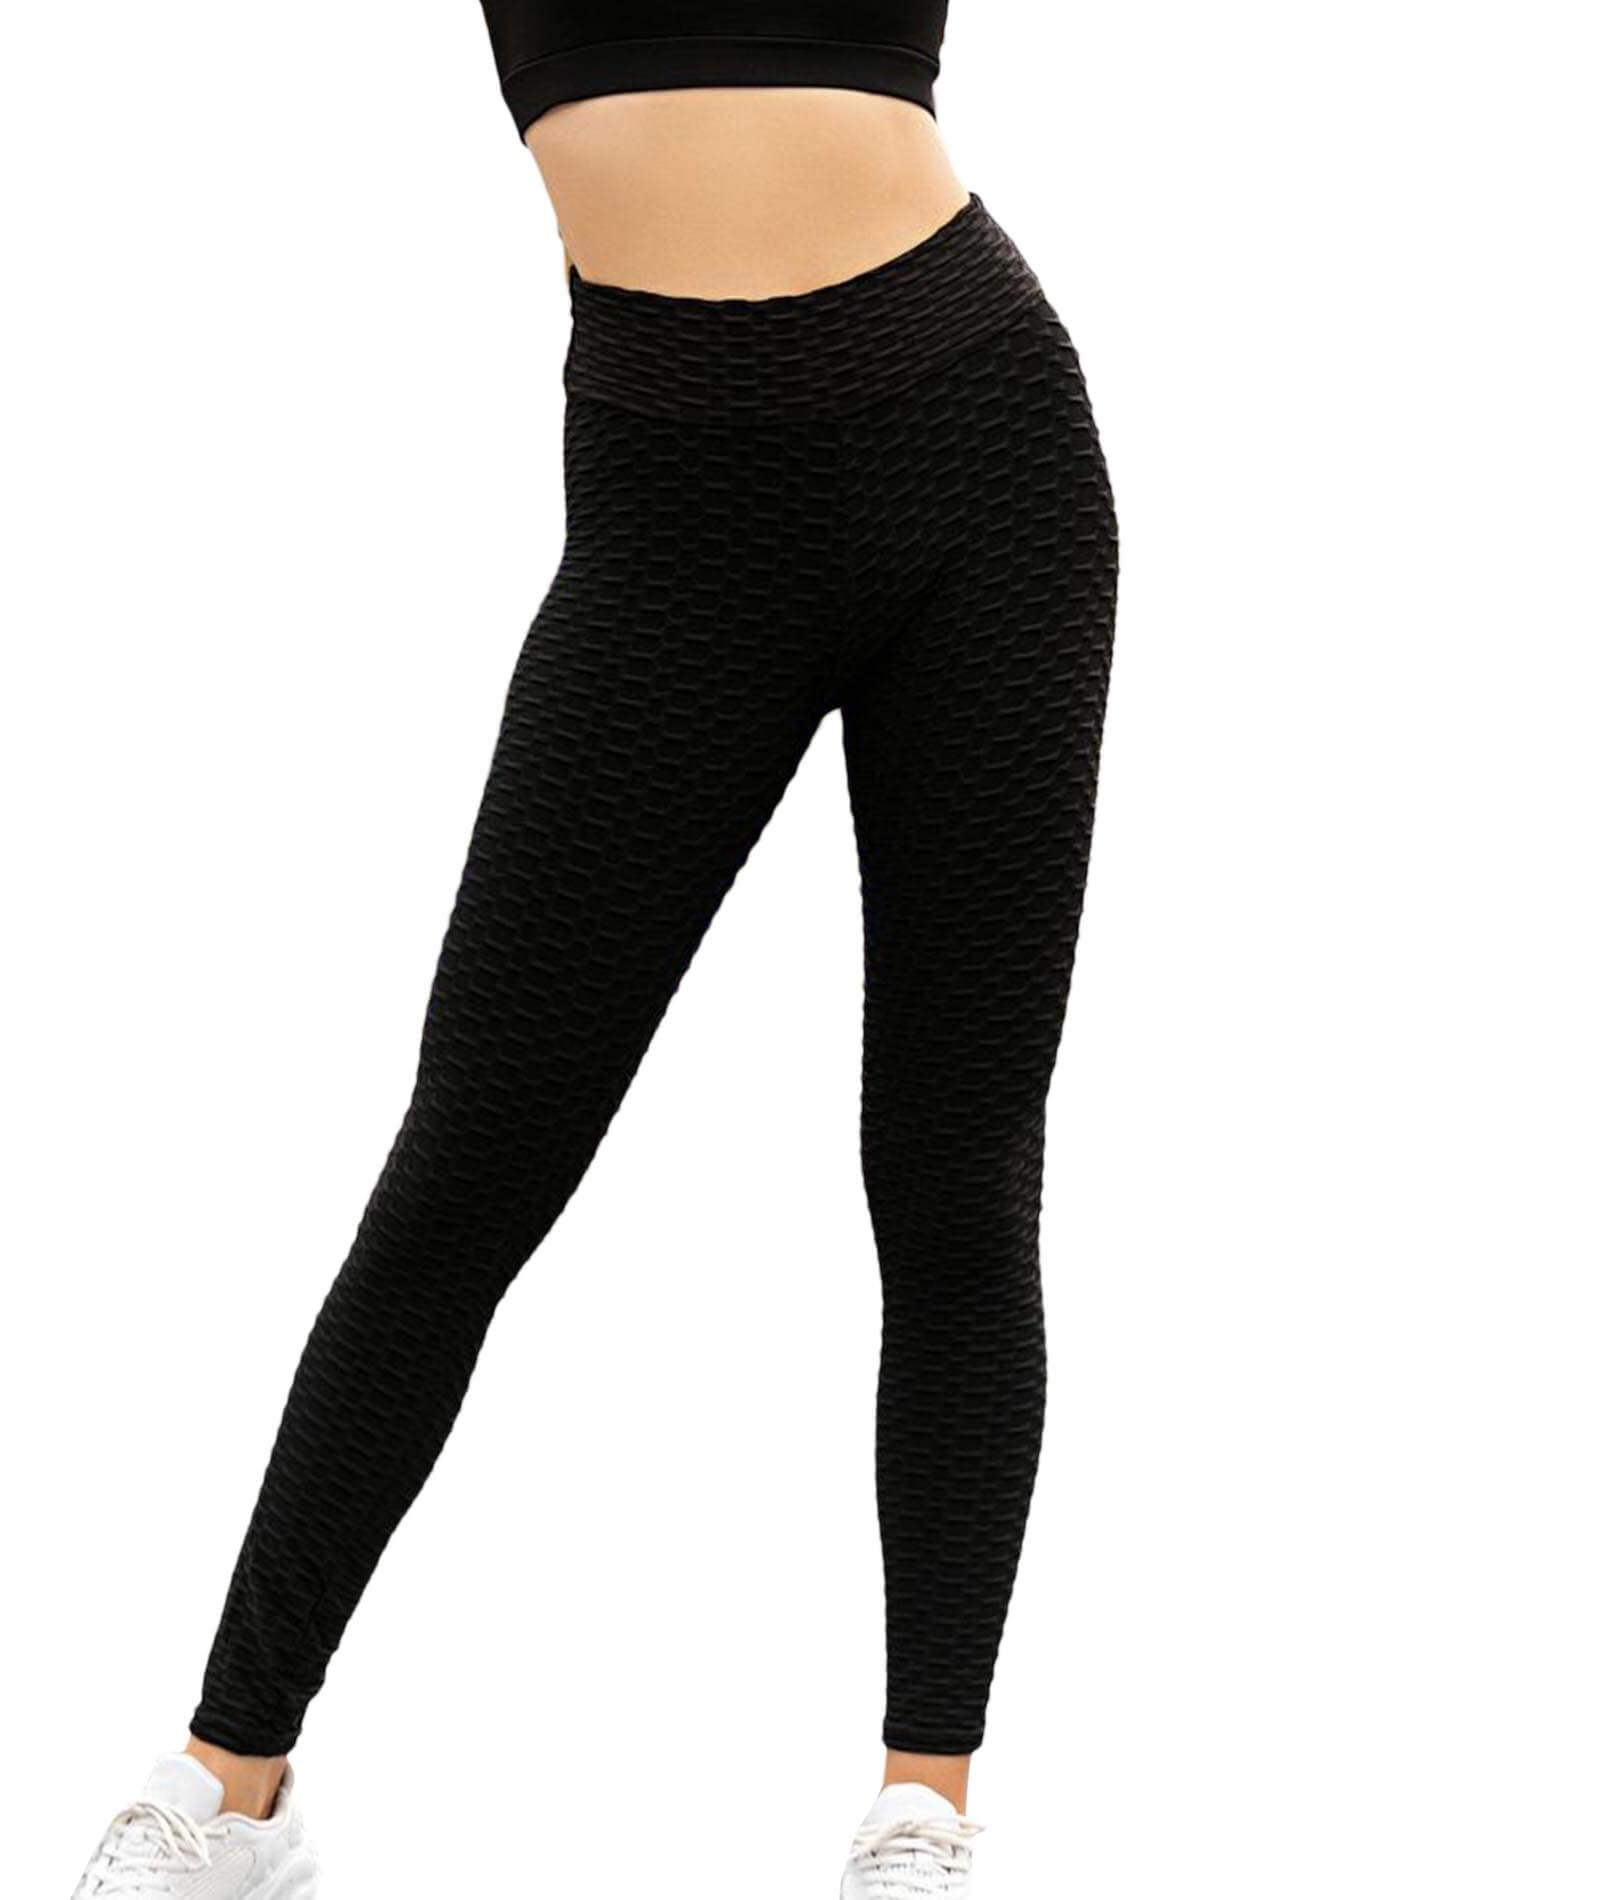  Women's Honeycomb Textured  High Waisted Yoga Pants Butt Lift Scrunch Booty Jacquard Leggings Workout Tights